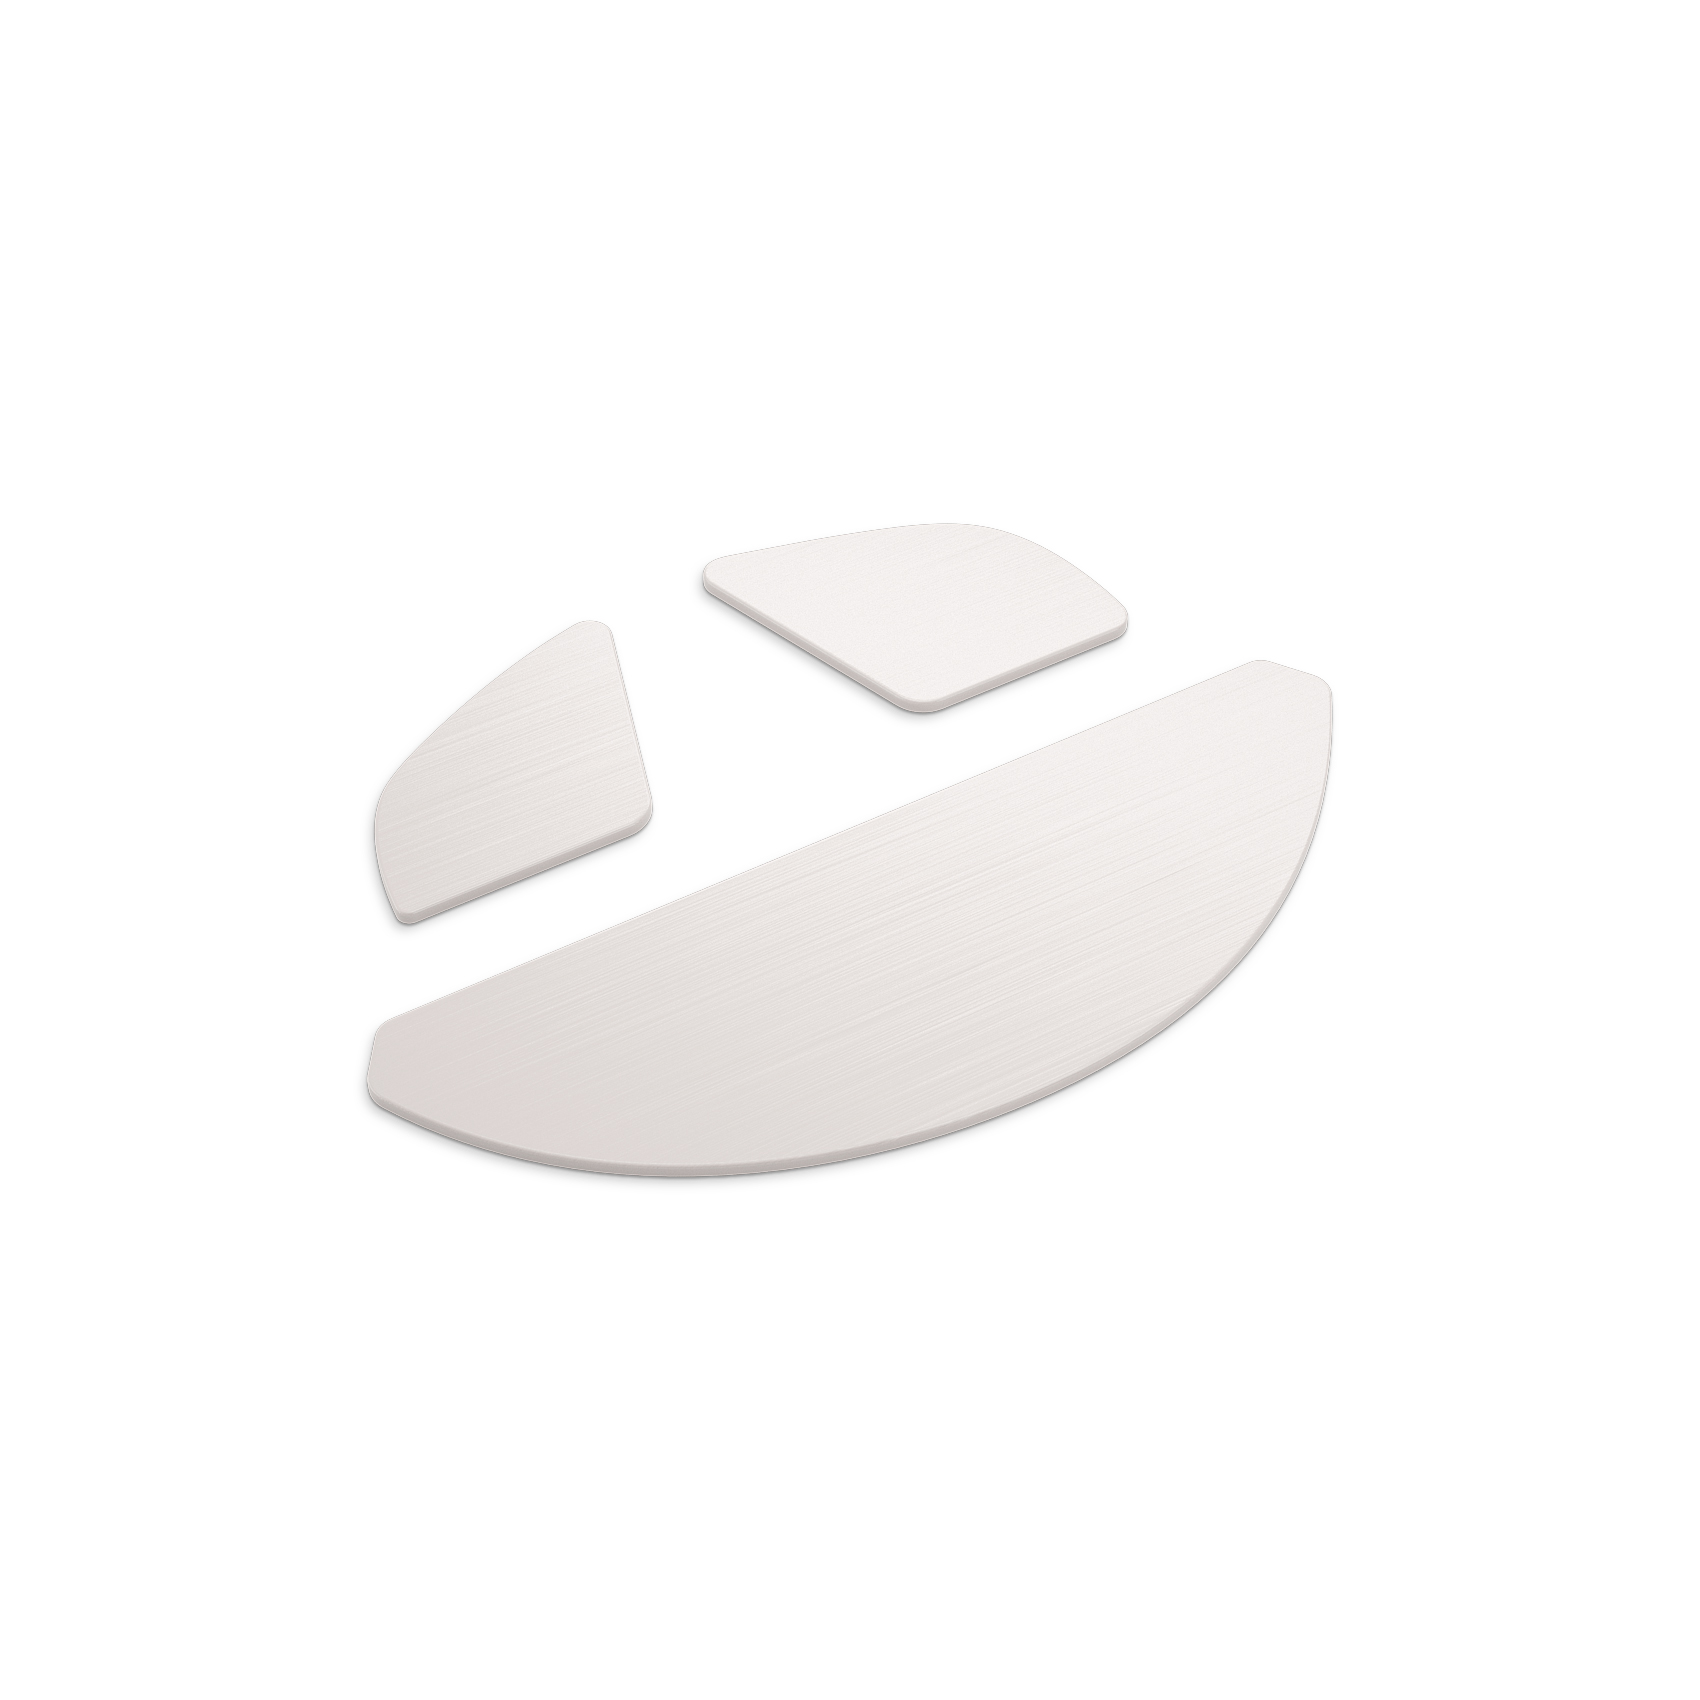 Machtig meel som HyperX Pulsefire Dart Wireless mouse feet - buy hyperglides HyperX  Pulsefire Dart Wireless mouse skates | FeetGlide